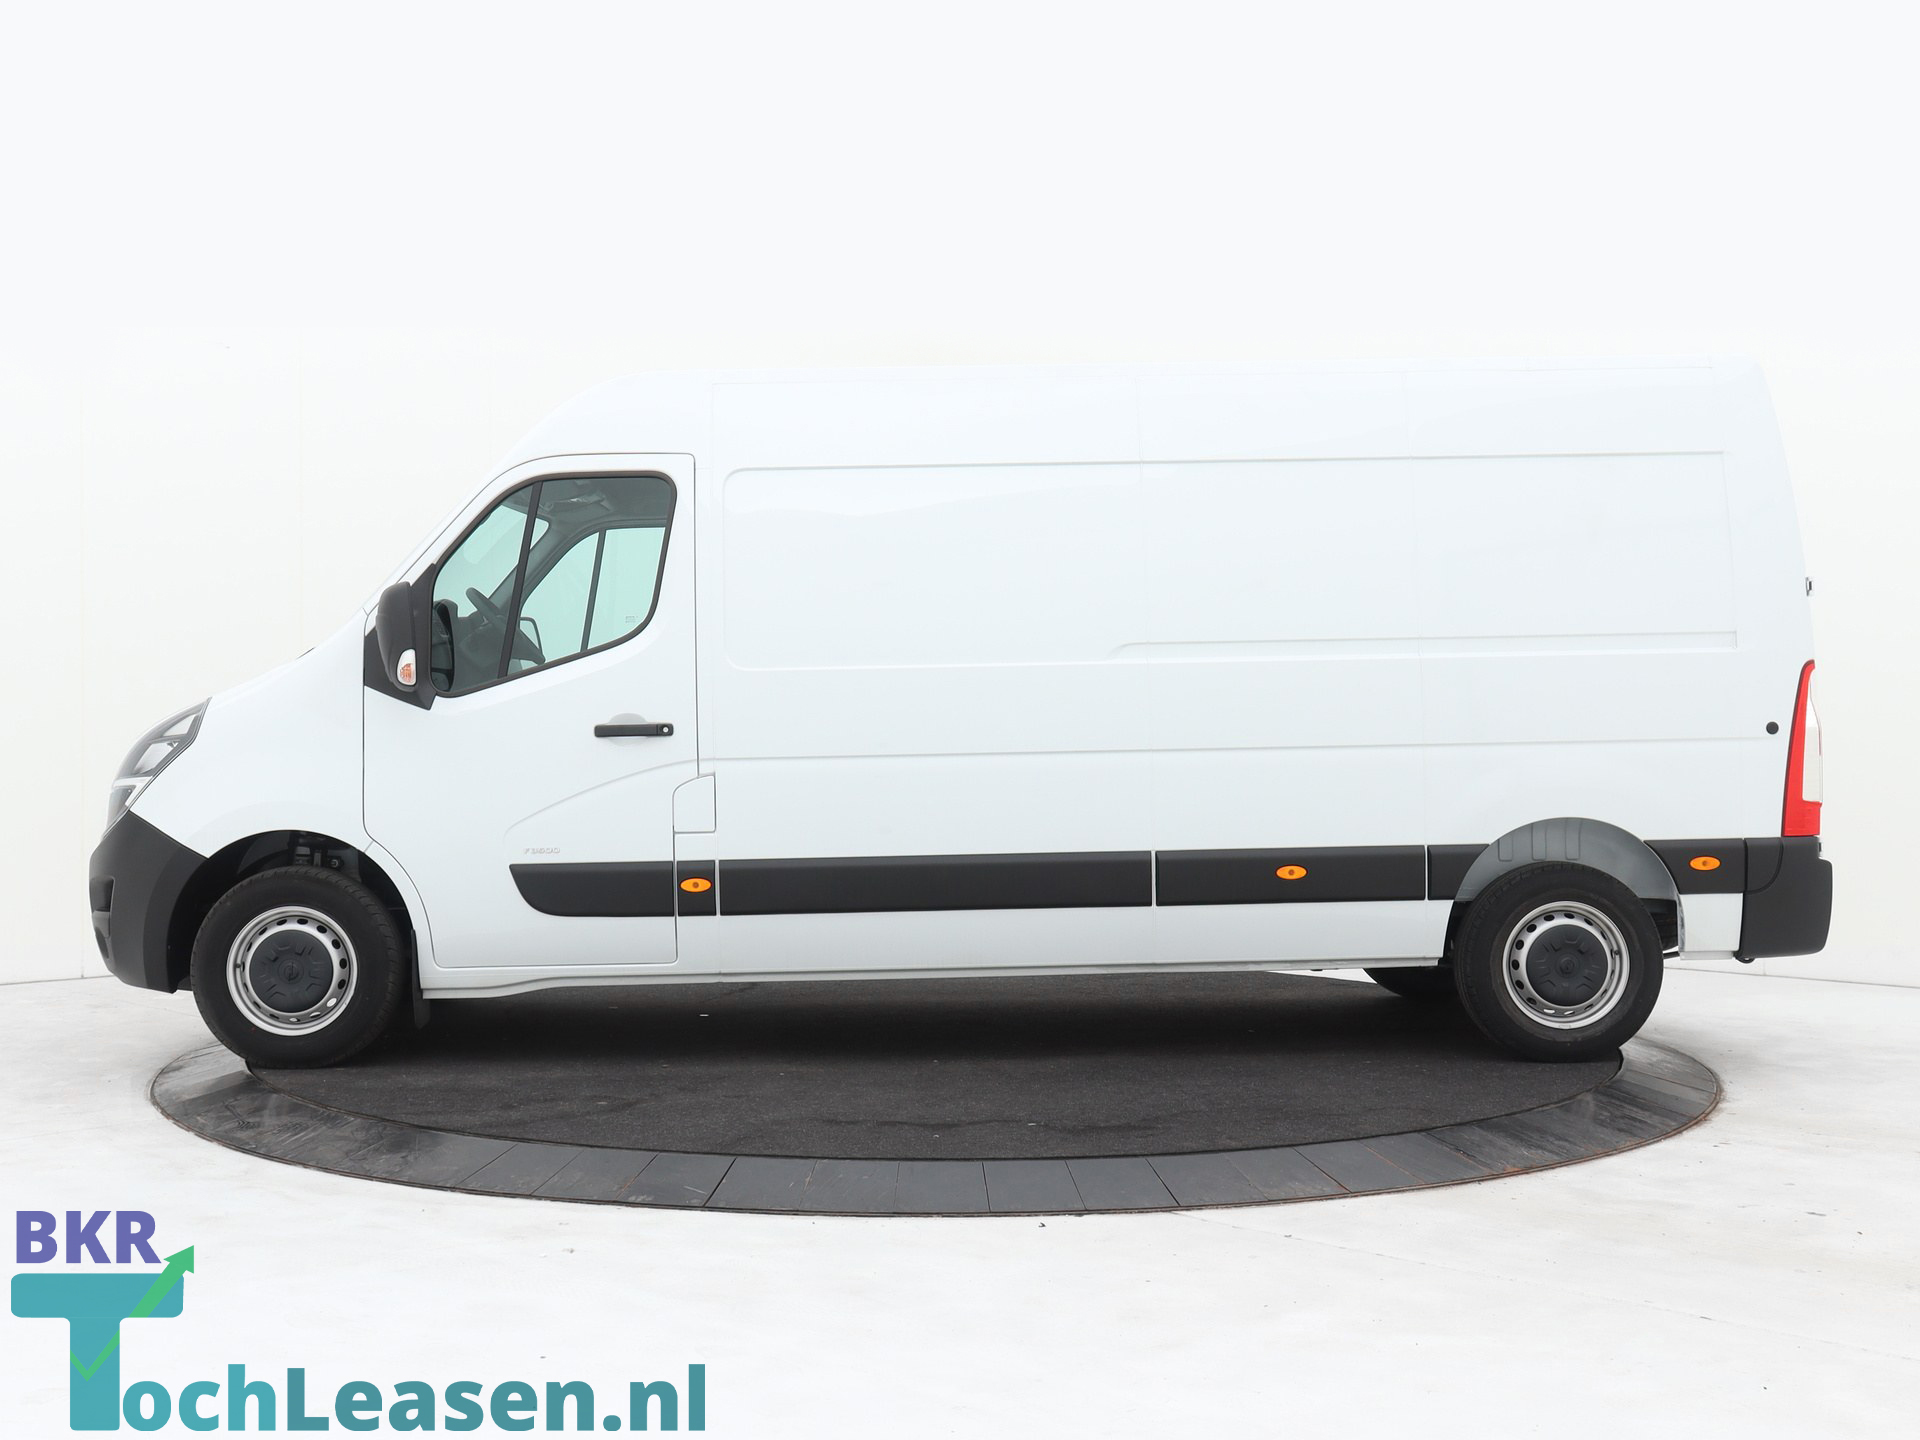 BKRTochLeasen.nl - Opel Movano - L3H2 - wit 06